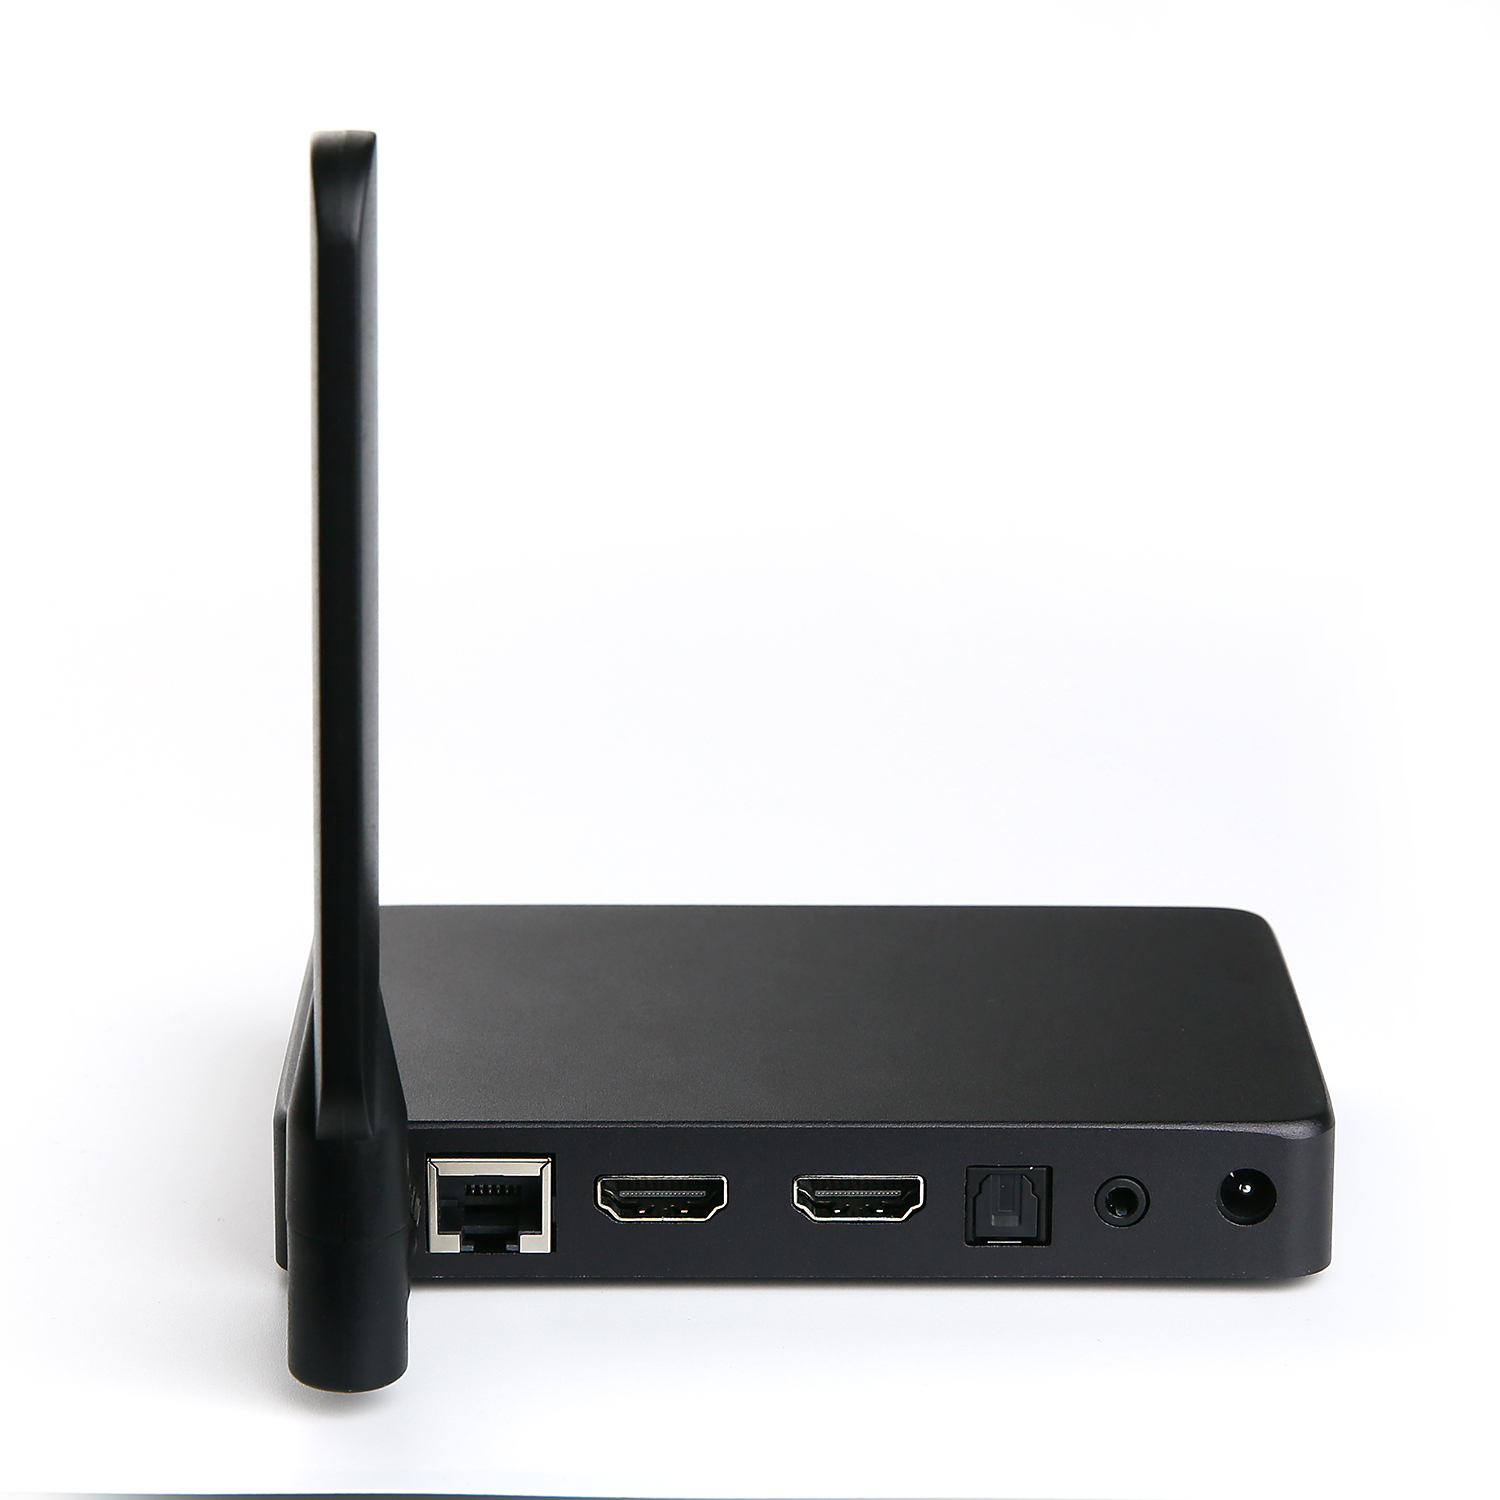 мини-ПК HDMI Android Realtek RTD1295, лучший Android мини-ПК HDMI вход, Android ключ HDMI вход